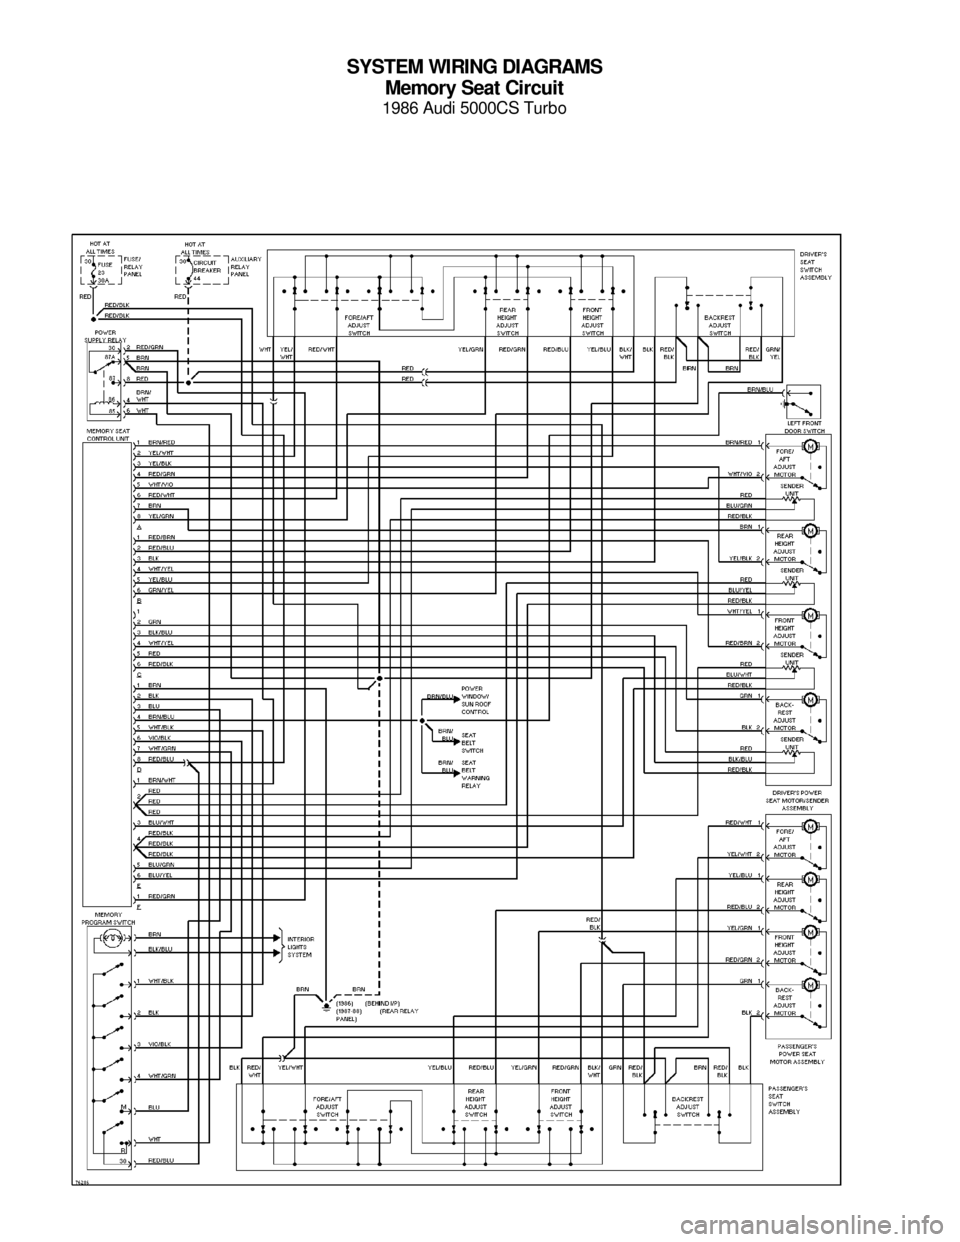 AUDI 5000CS 1986 C2 System Wiring Diagram SYSTEM WIRING DIAGRAMS
Memory Seat Circuit
1986 Audi 5000CS Turbo
For x    
Copyright © 1998 Mitchell Repair Information Company, LLCMonday, July 19, 2004  05:52PM 